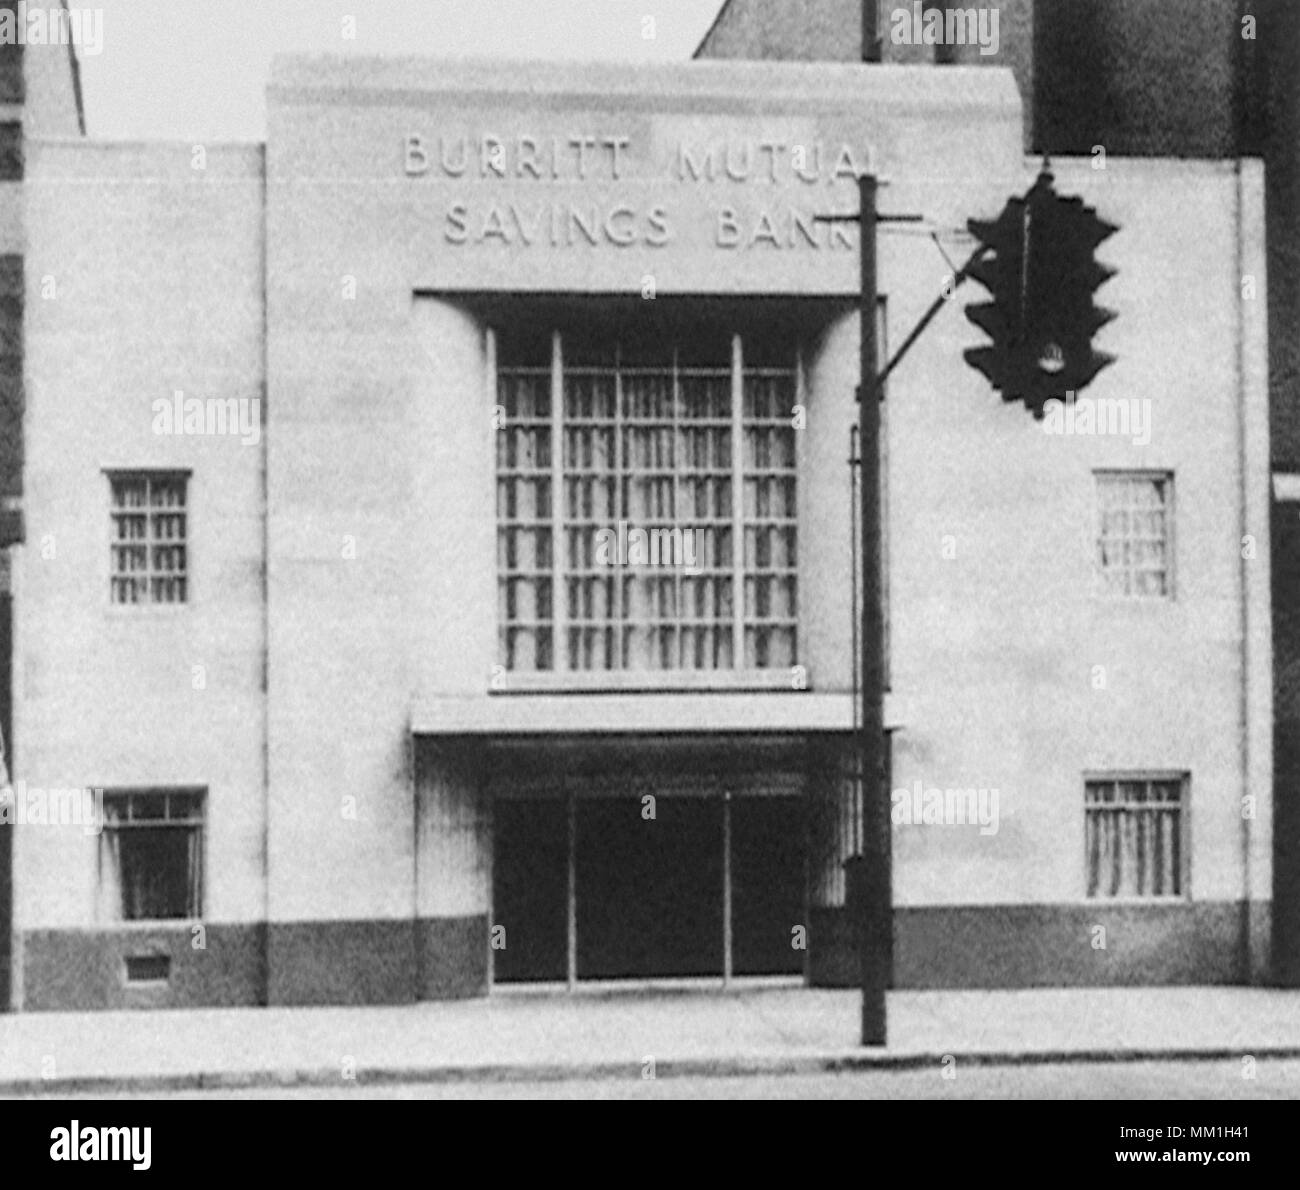 Burrit Mutual Savings Bank. New Britain. 1950 Stock Photo